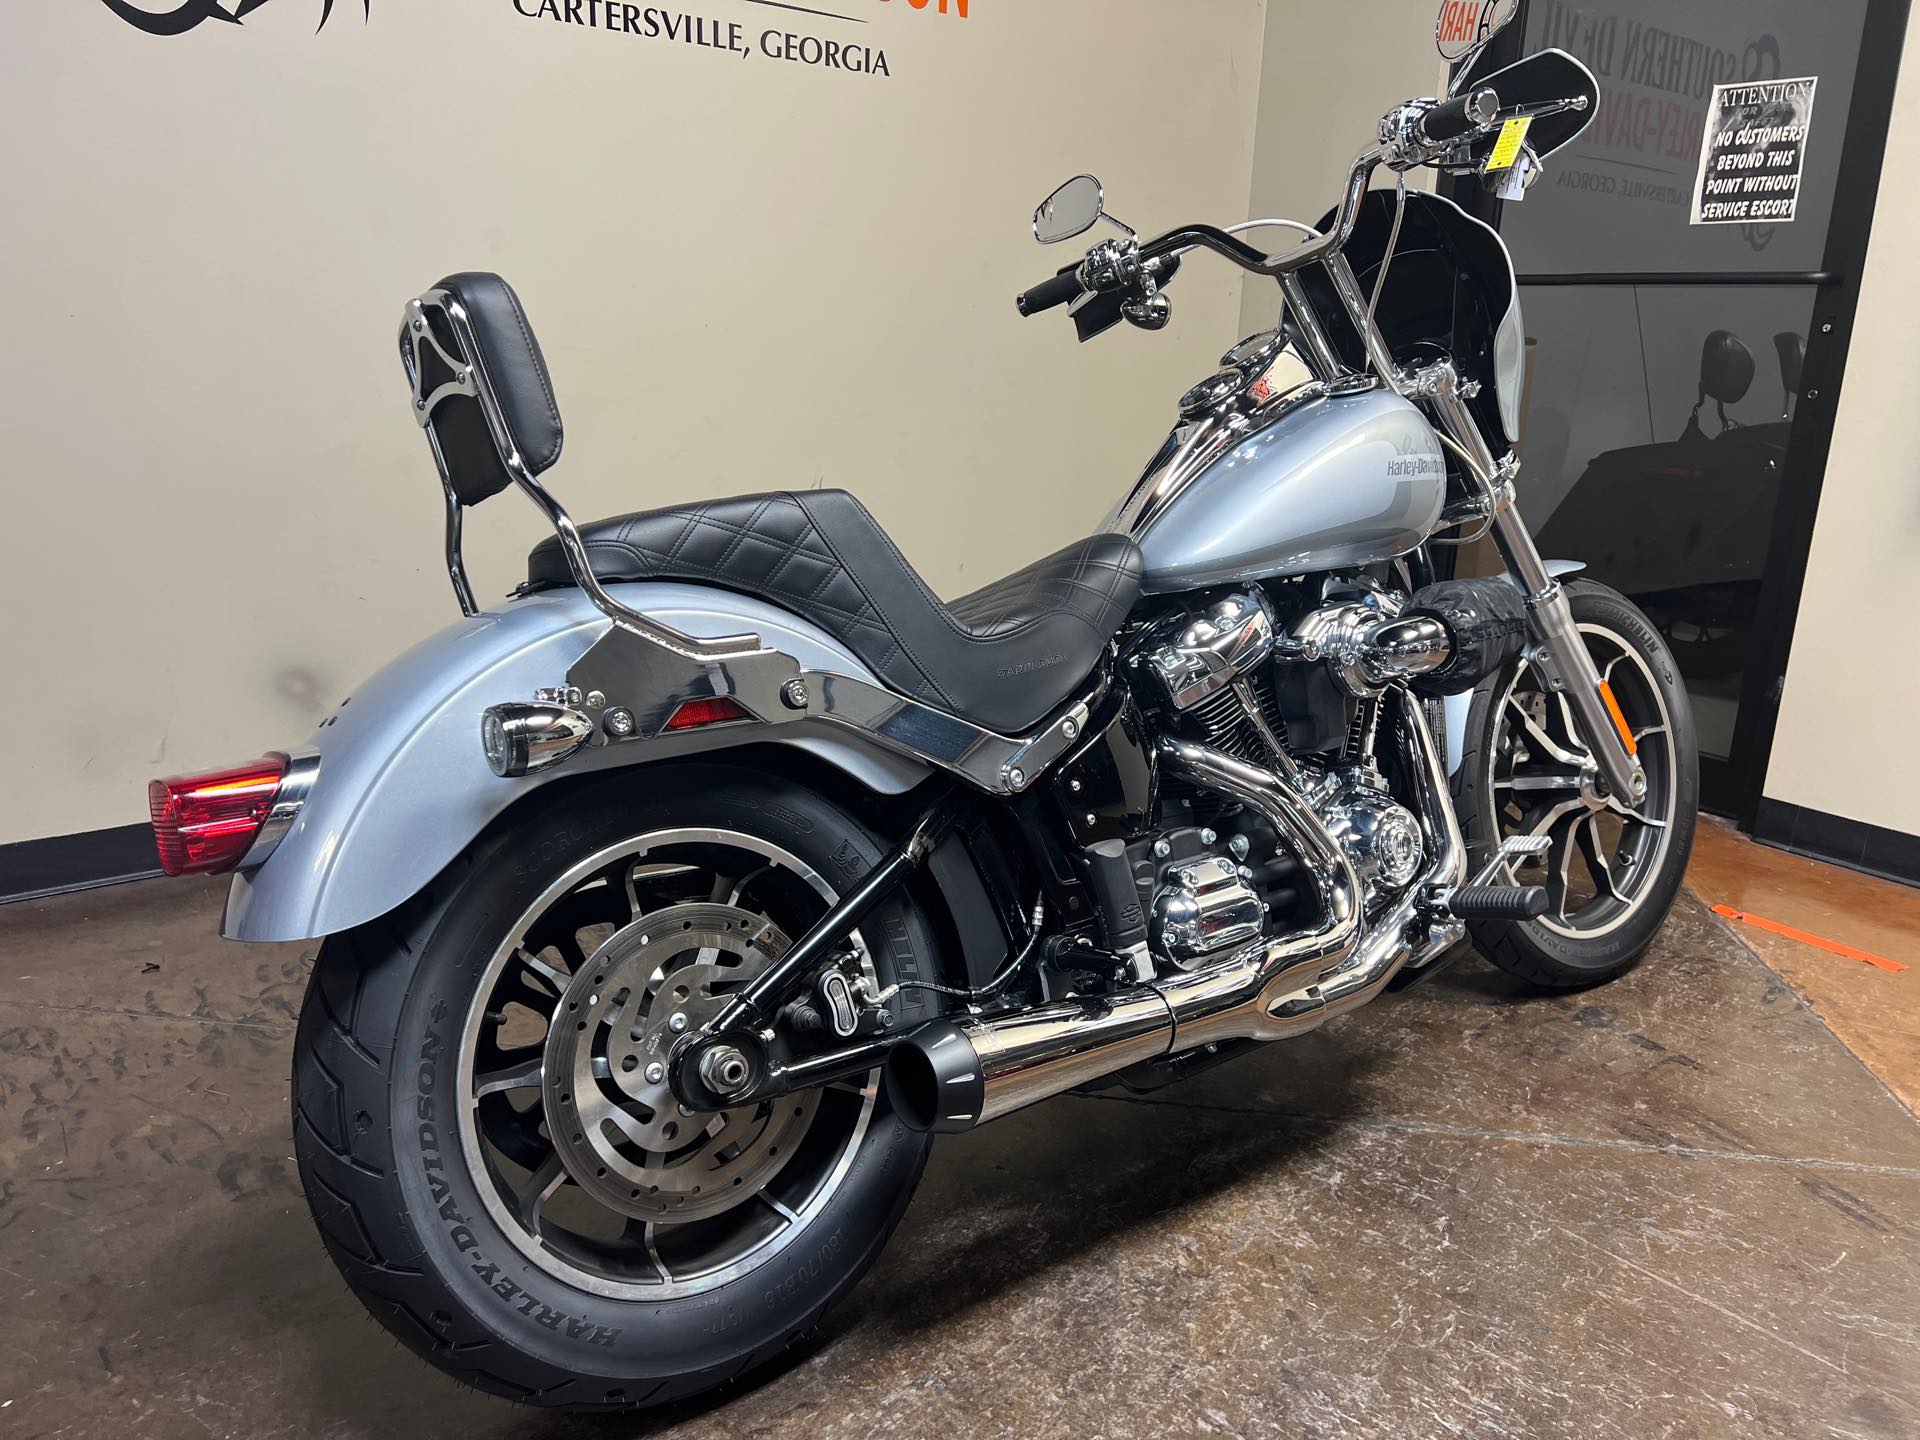 2019 Harley-Davidson Softail Low Rider at Southern Devil Harley-Davidson